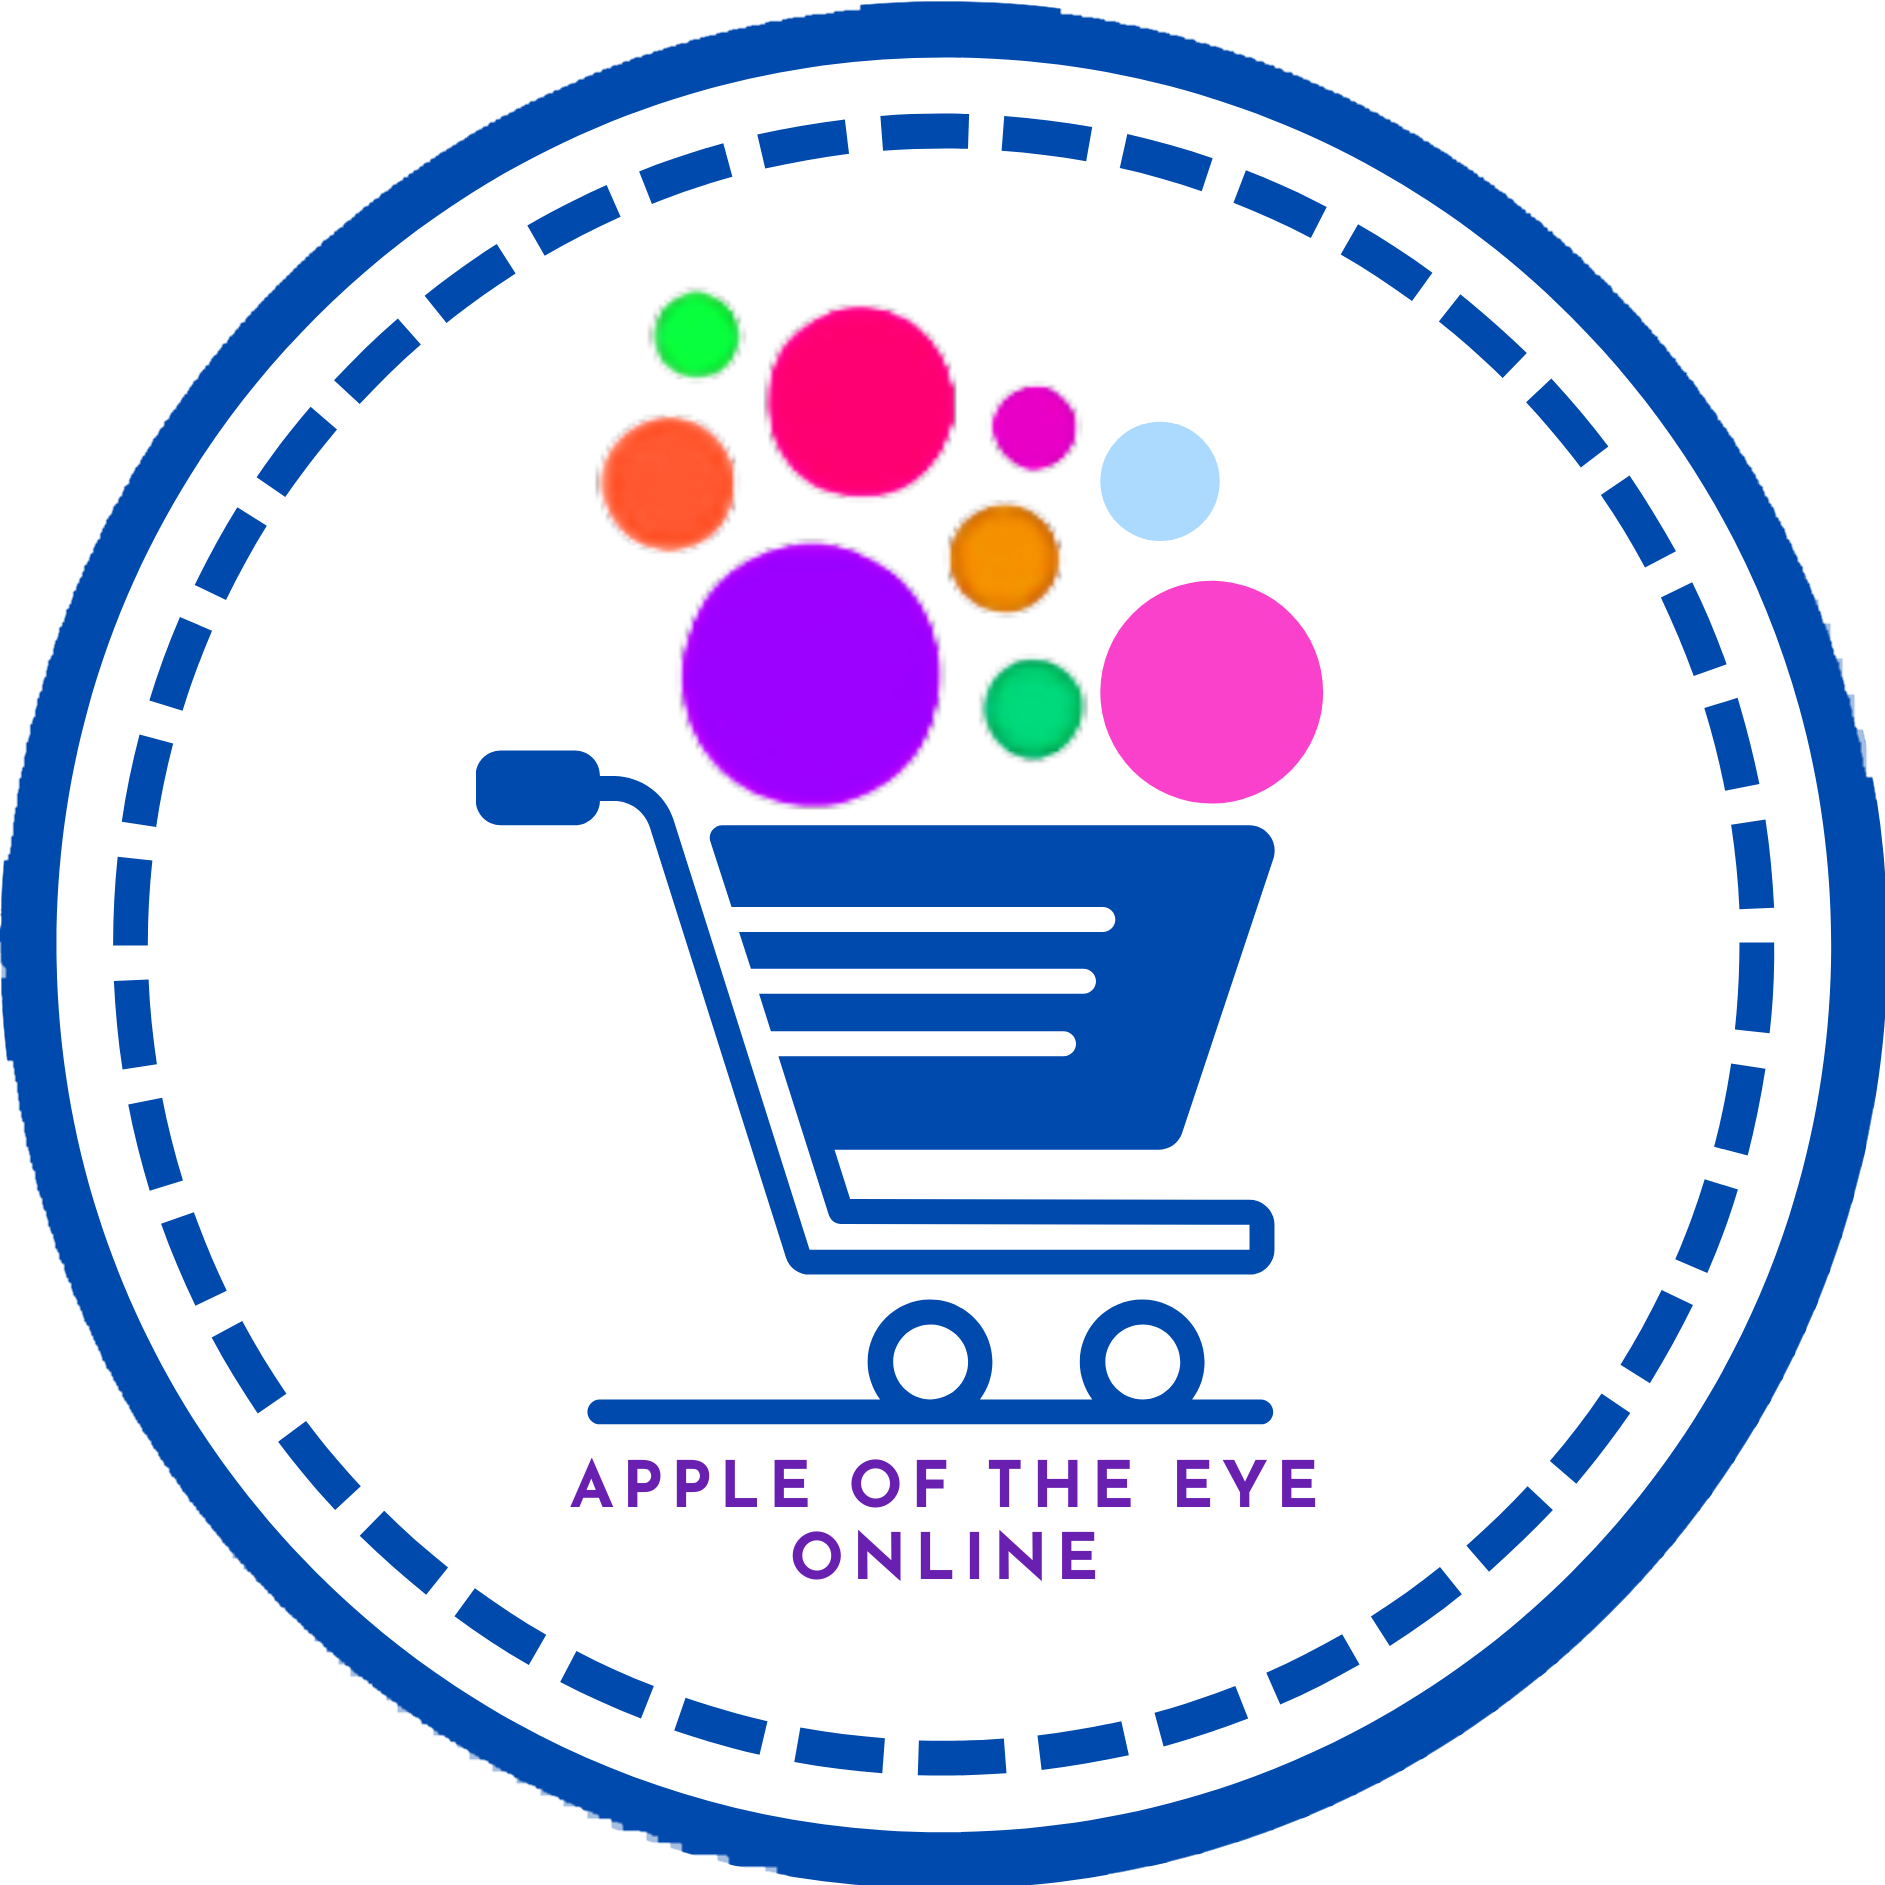 Apple of the eye online